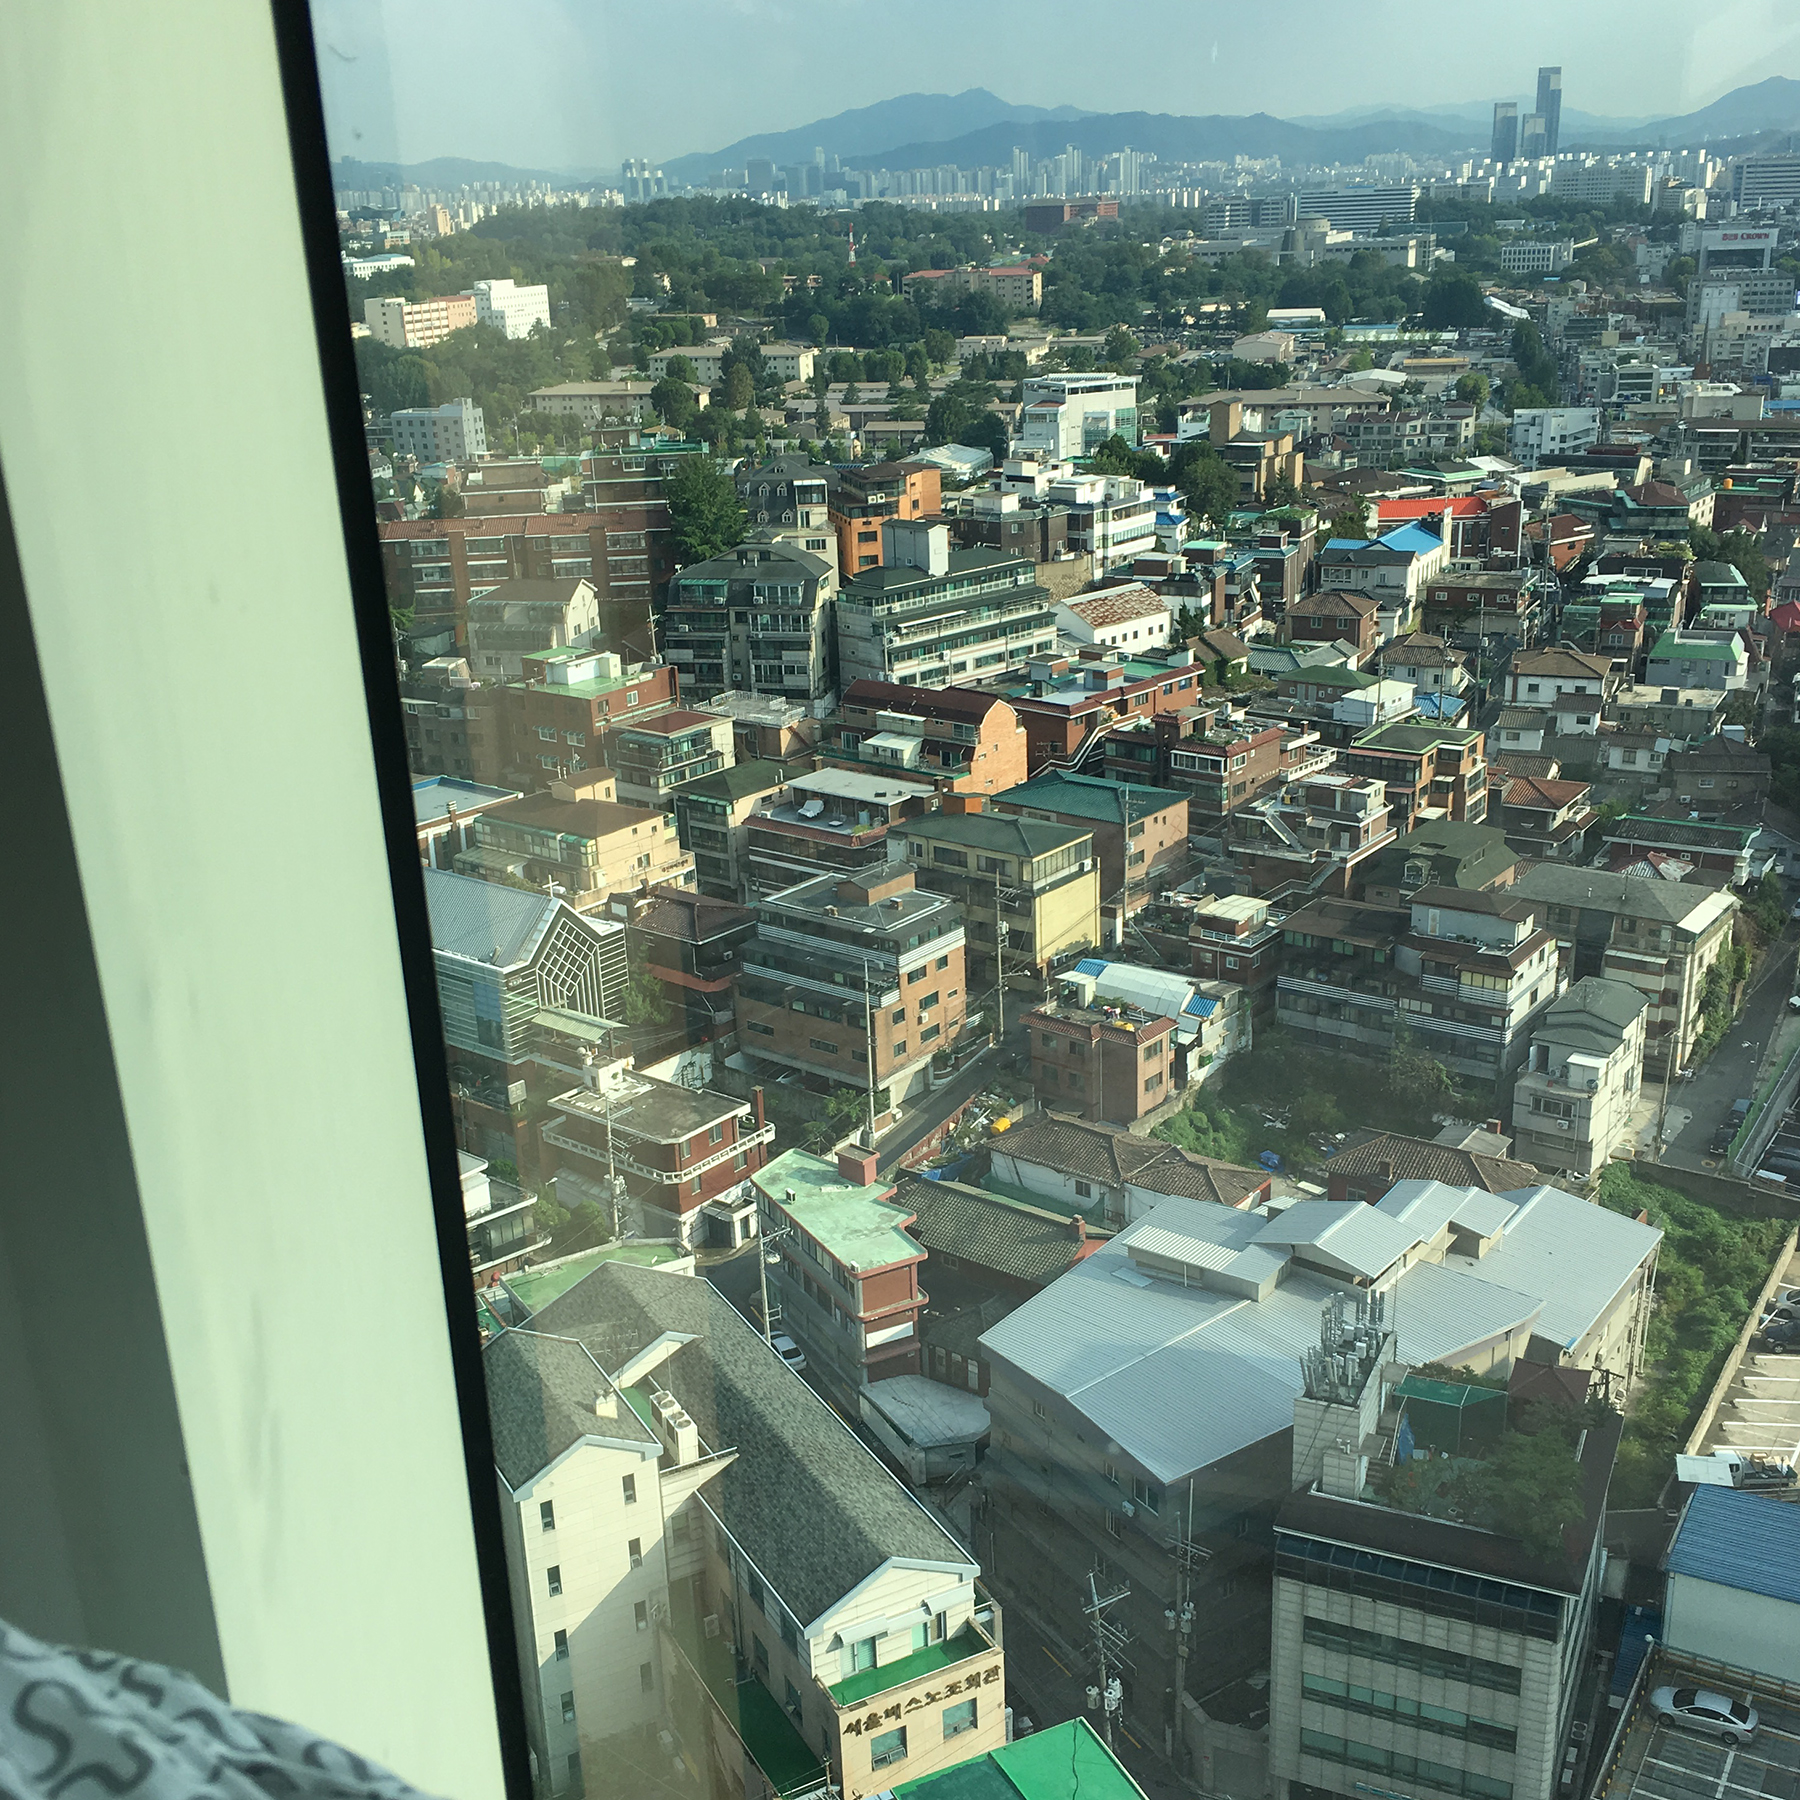 waking up to the gorgeous Seoul Skyline